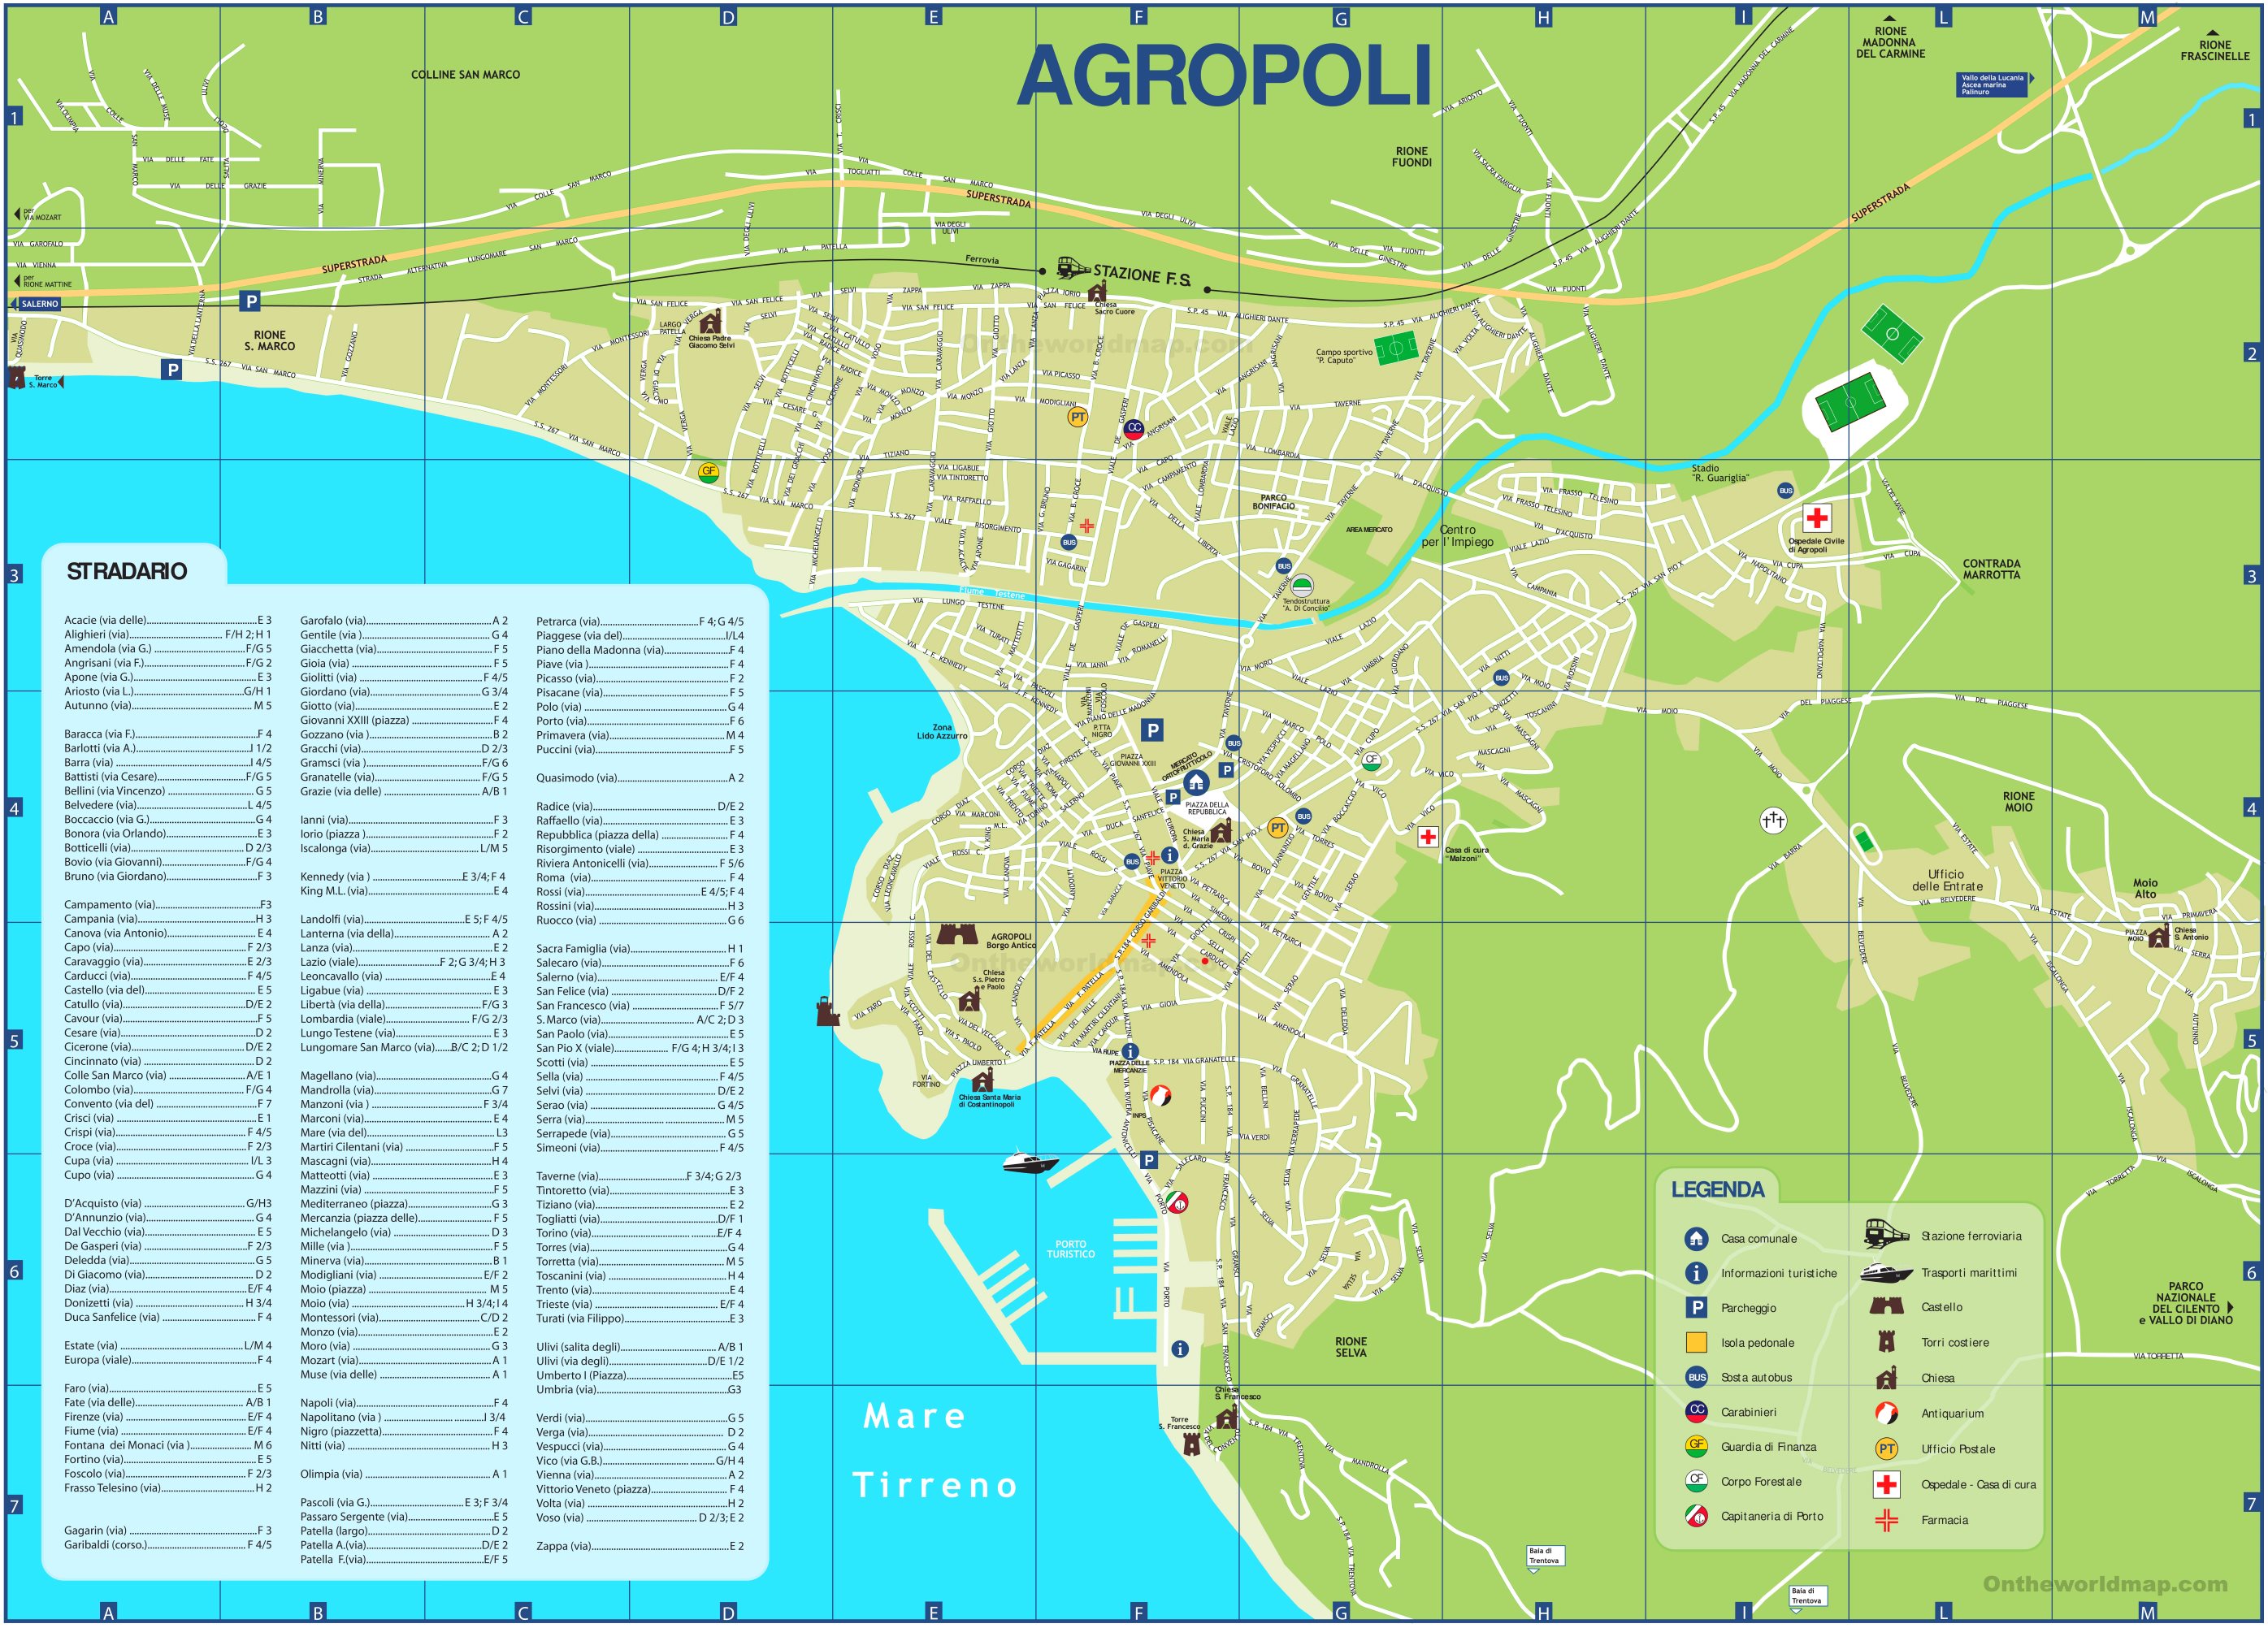 Agropoli Tourist Attractions Map - Ontheworldmap.com